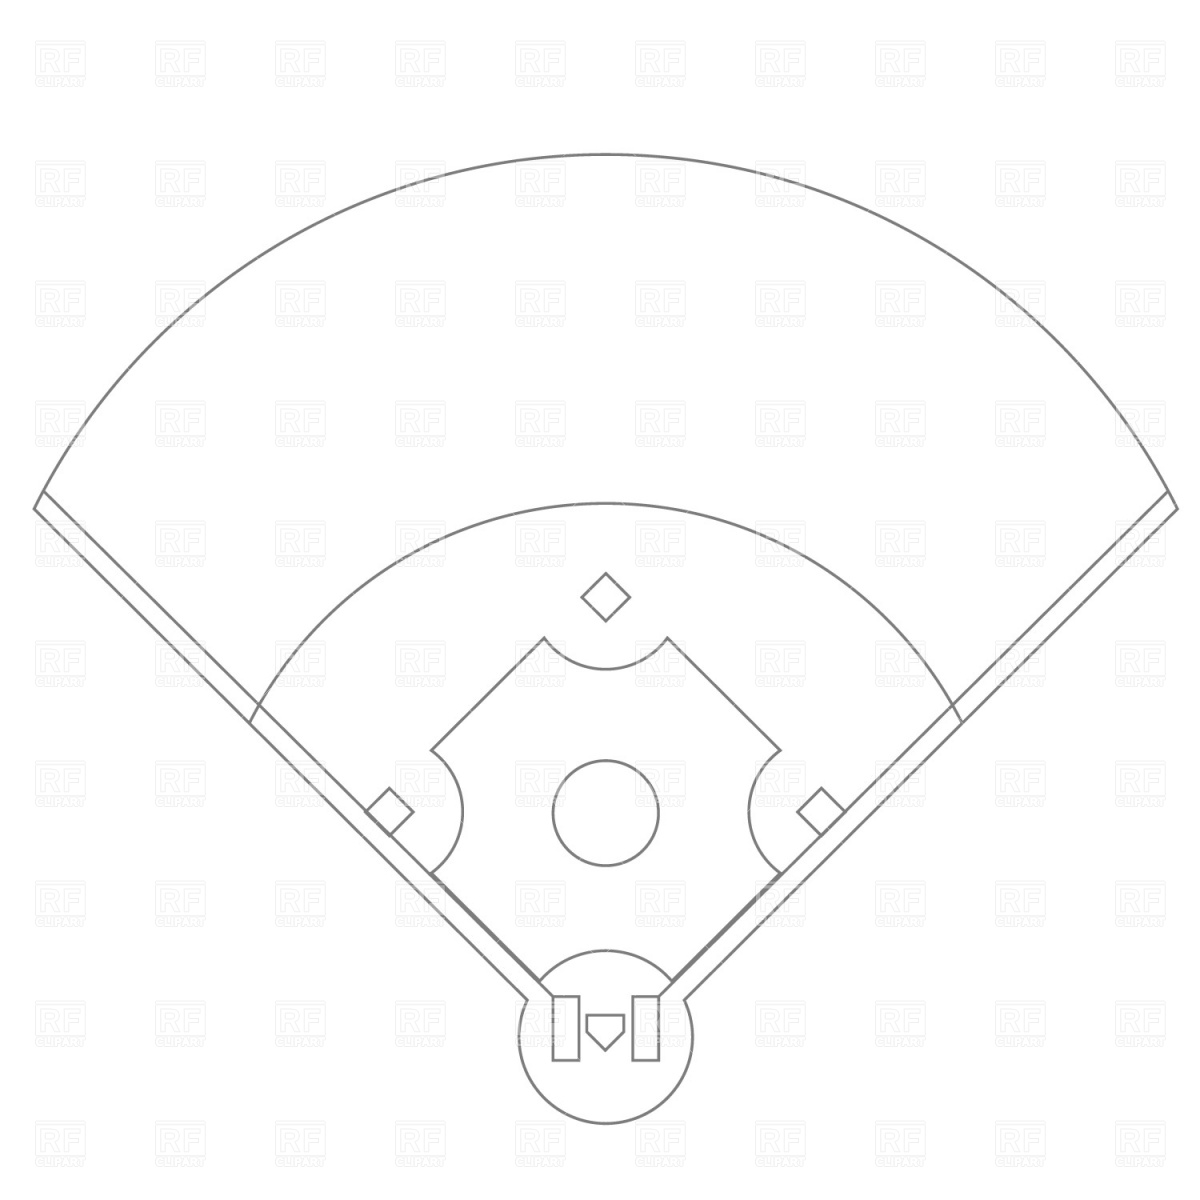 Free Blank Baseball Diamond, Download Free Clip Art, Free